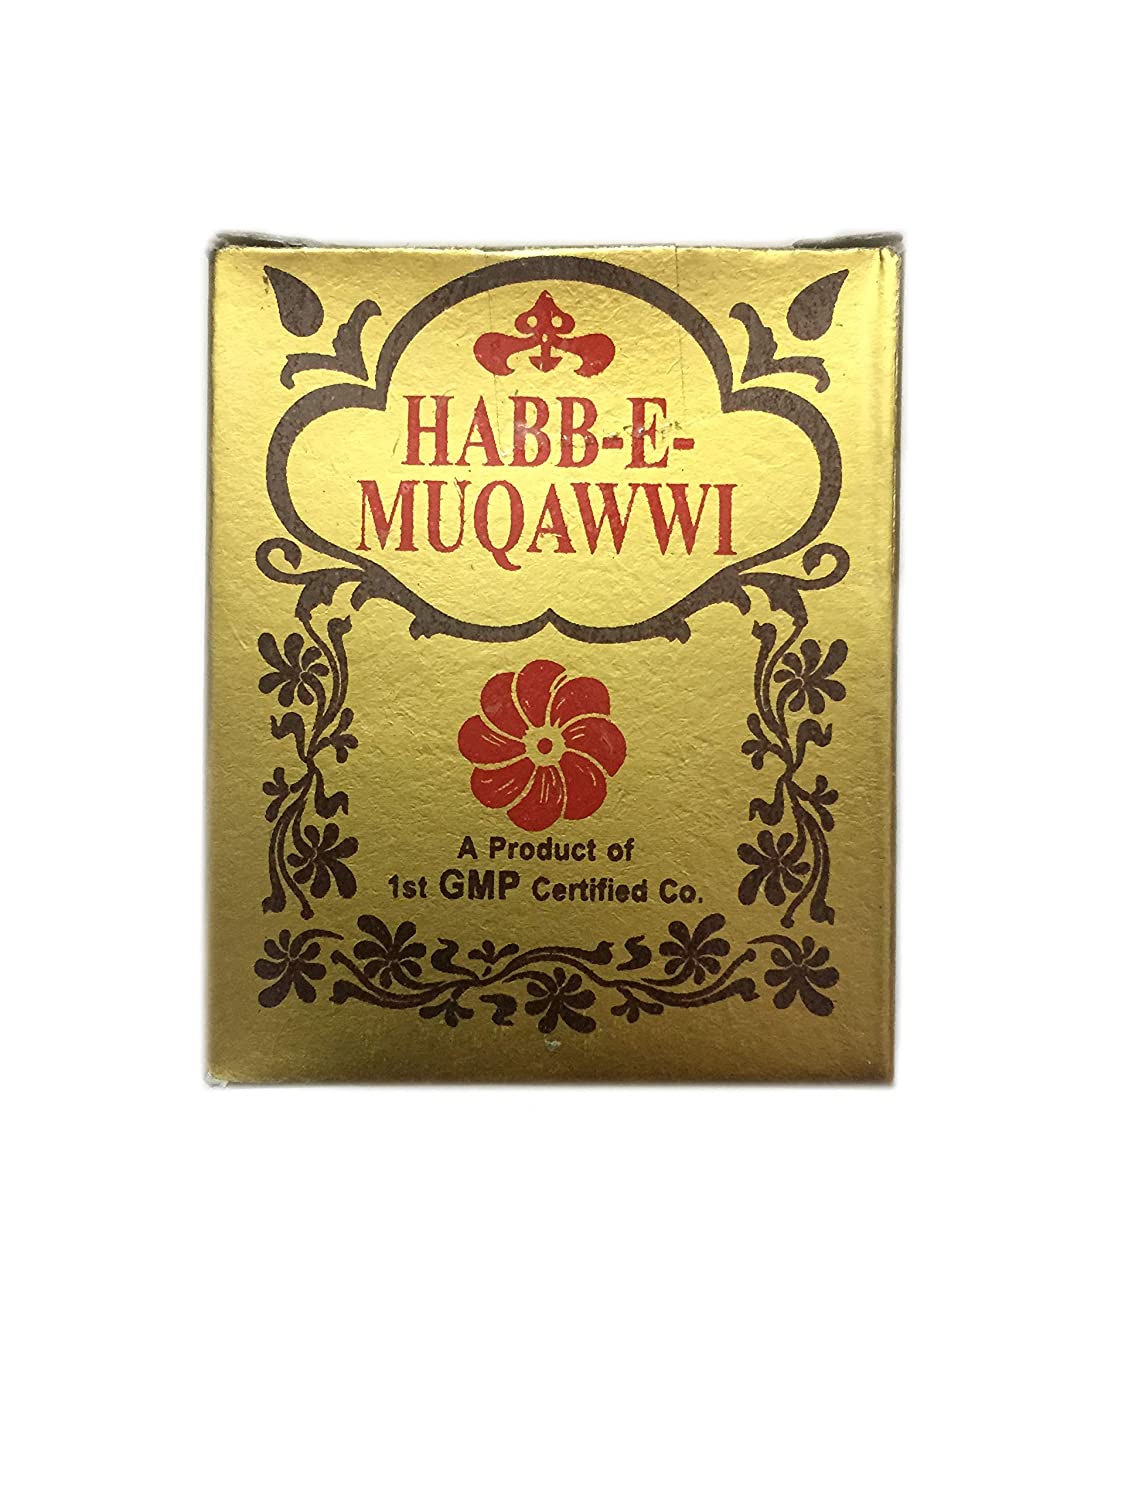 Rex Remedies Limited Habb-E-Muqawwi